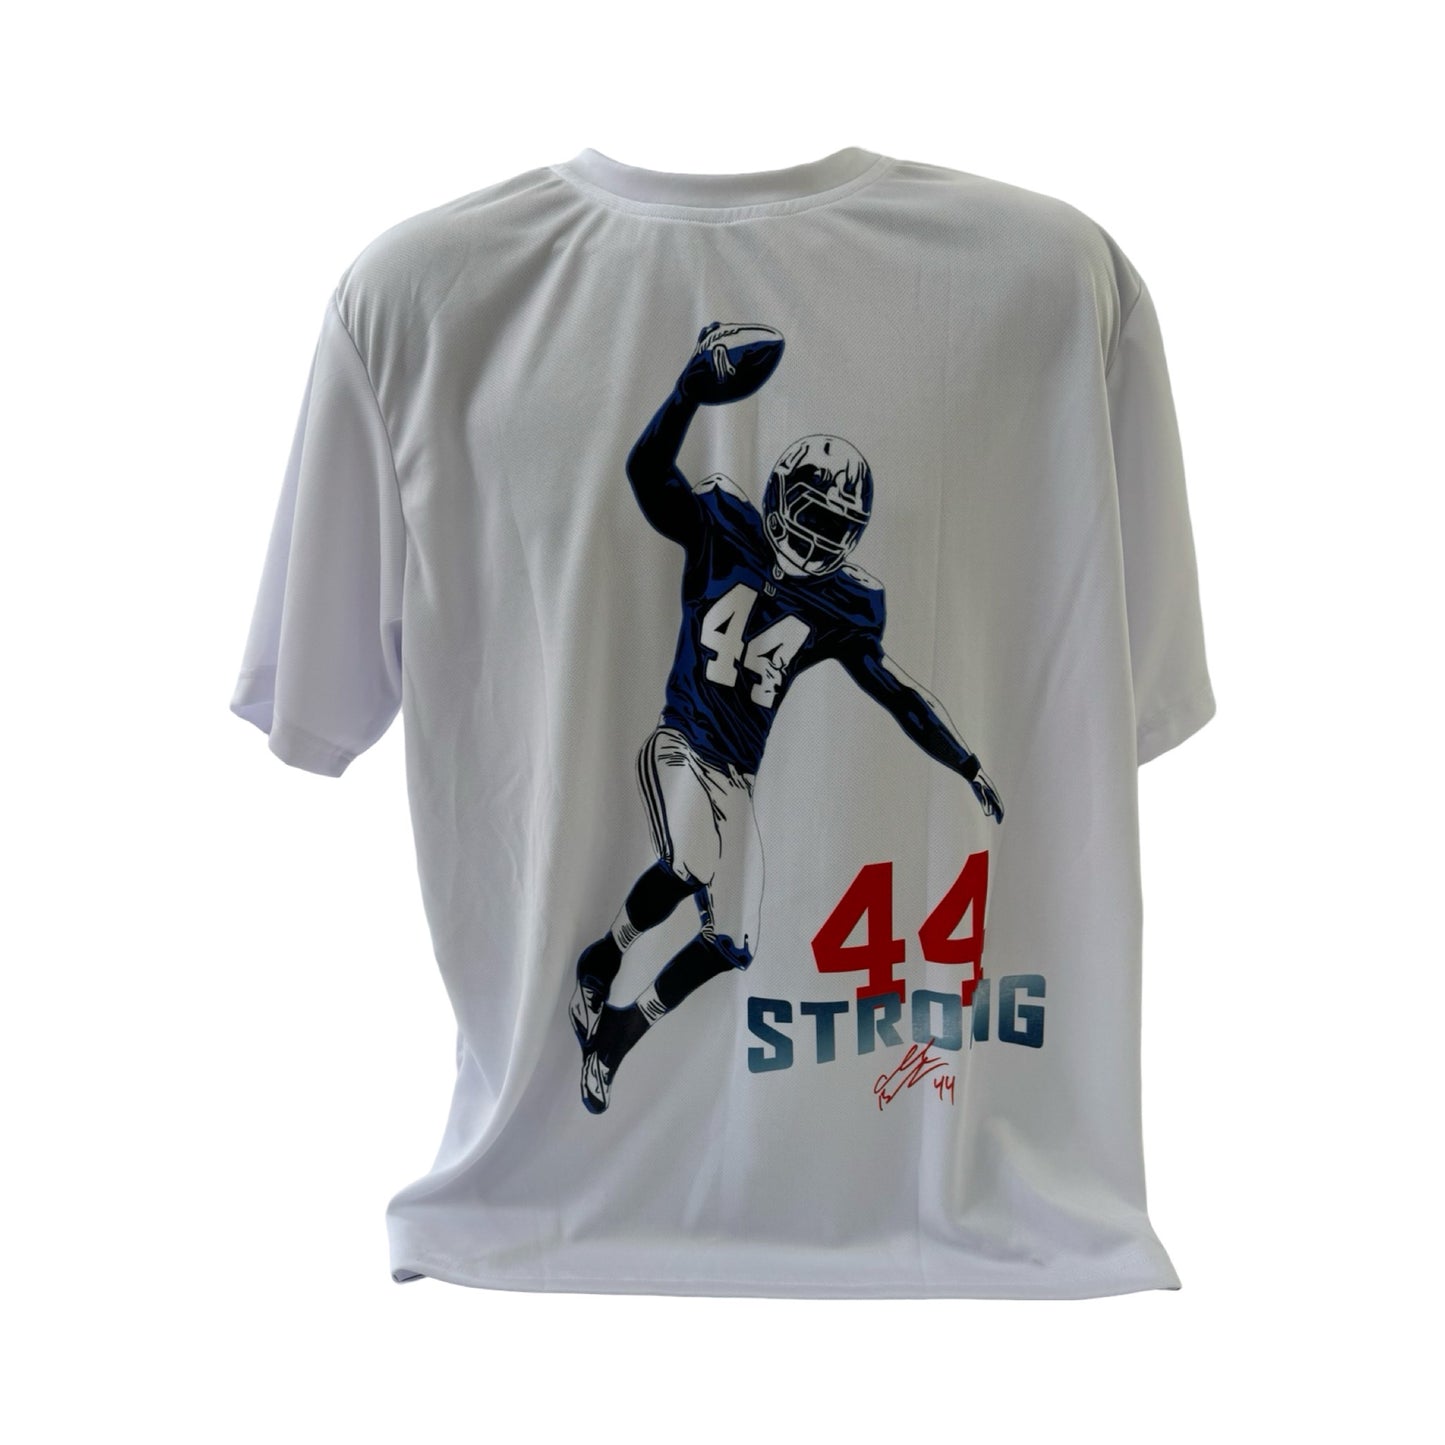 Ahmad Bradshaw 44 Strong Spike White T-Shirt